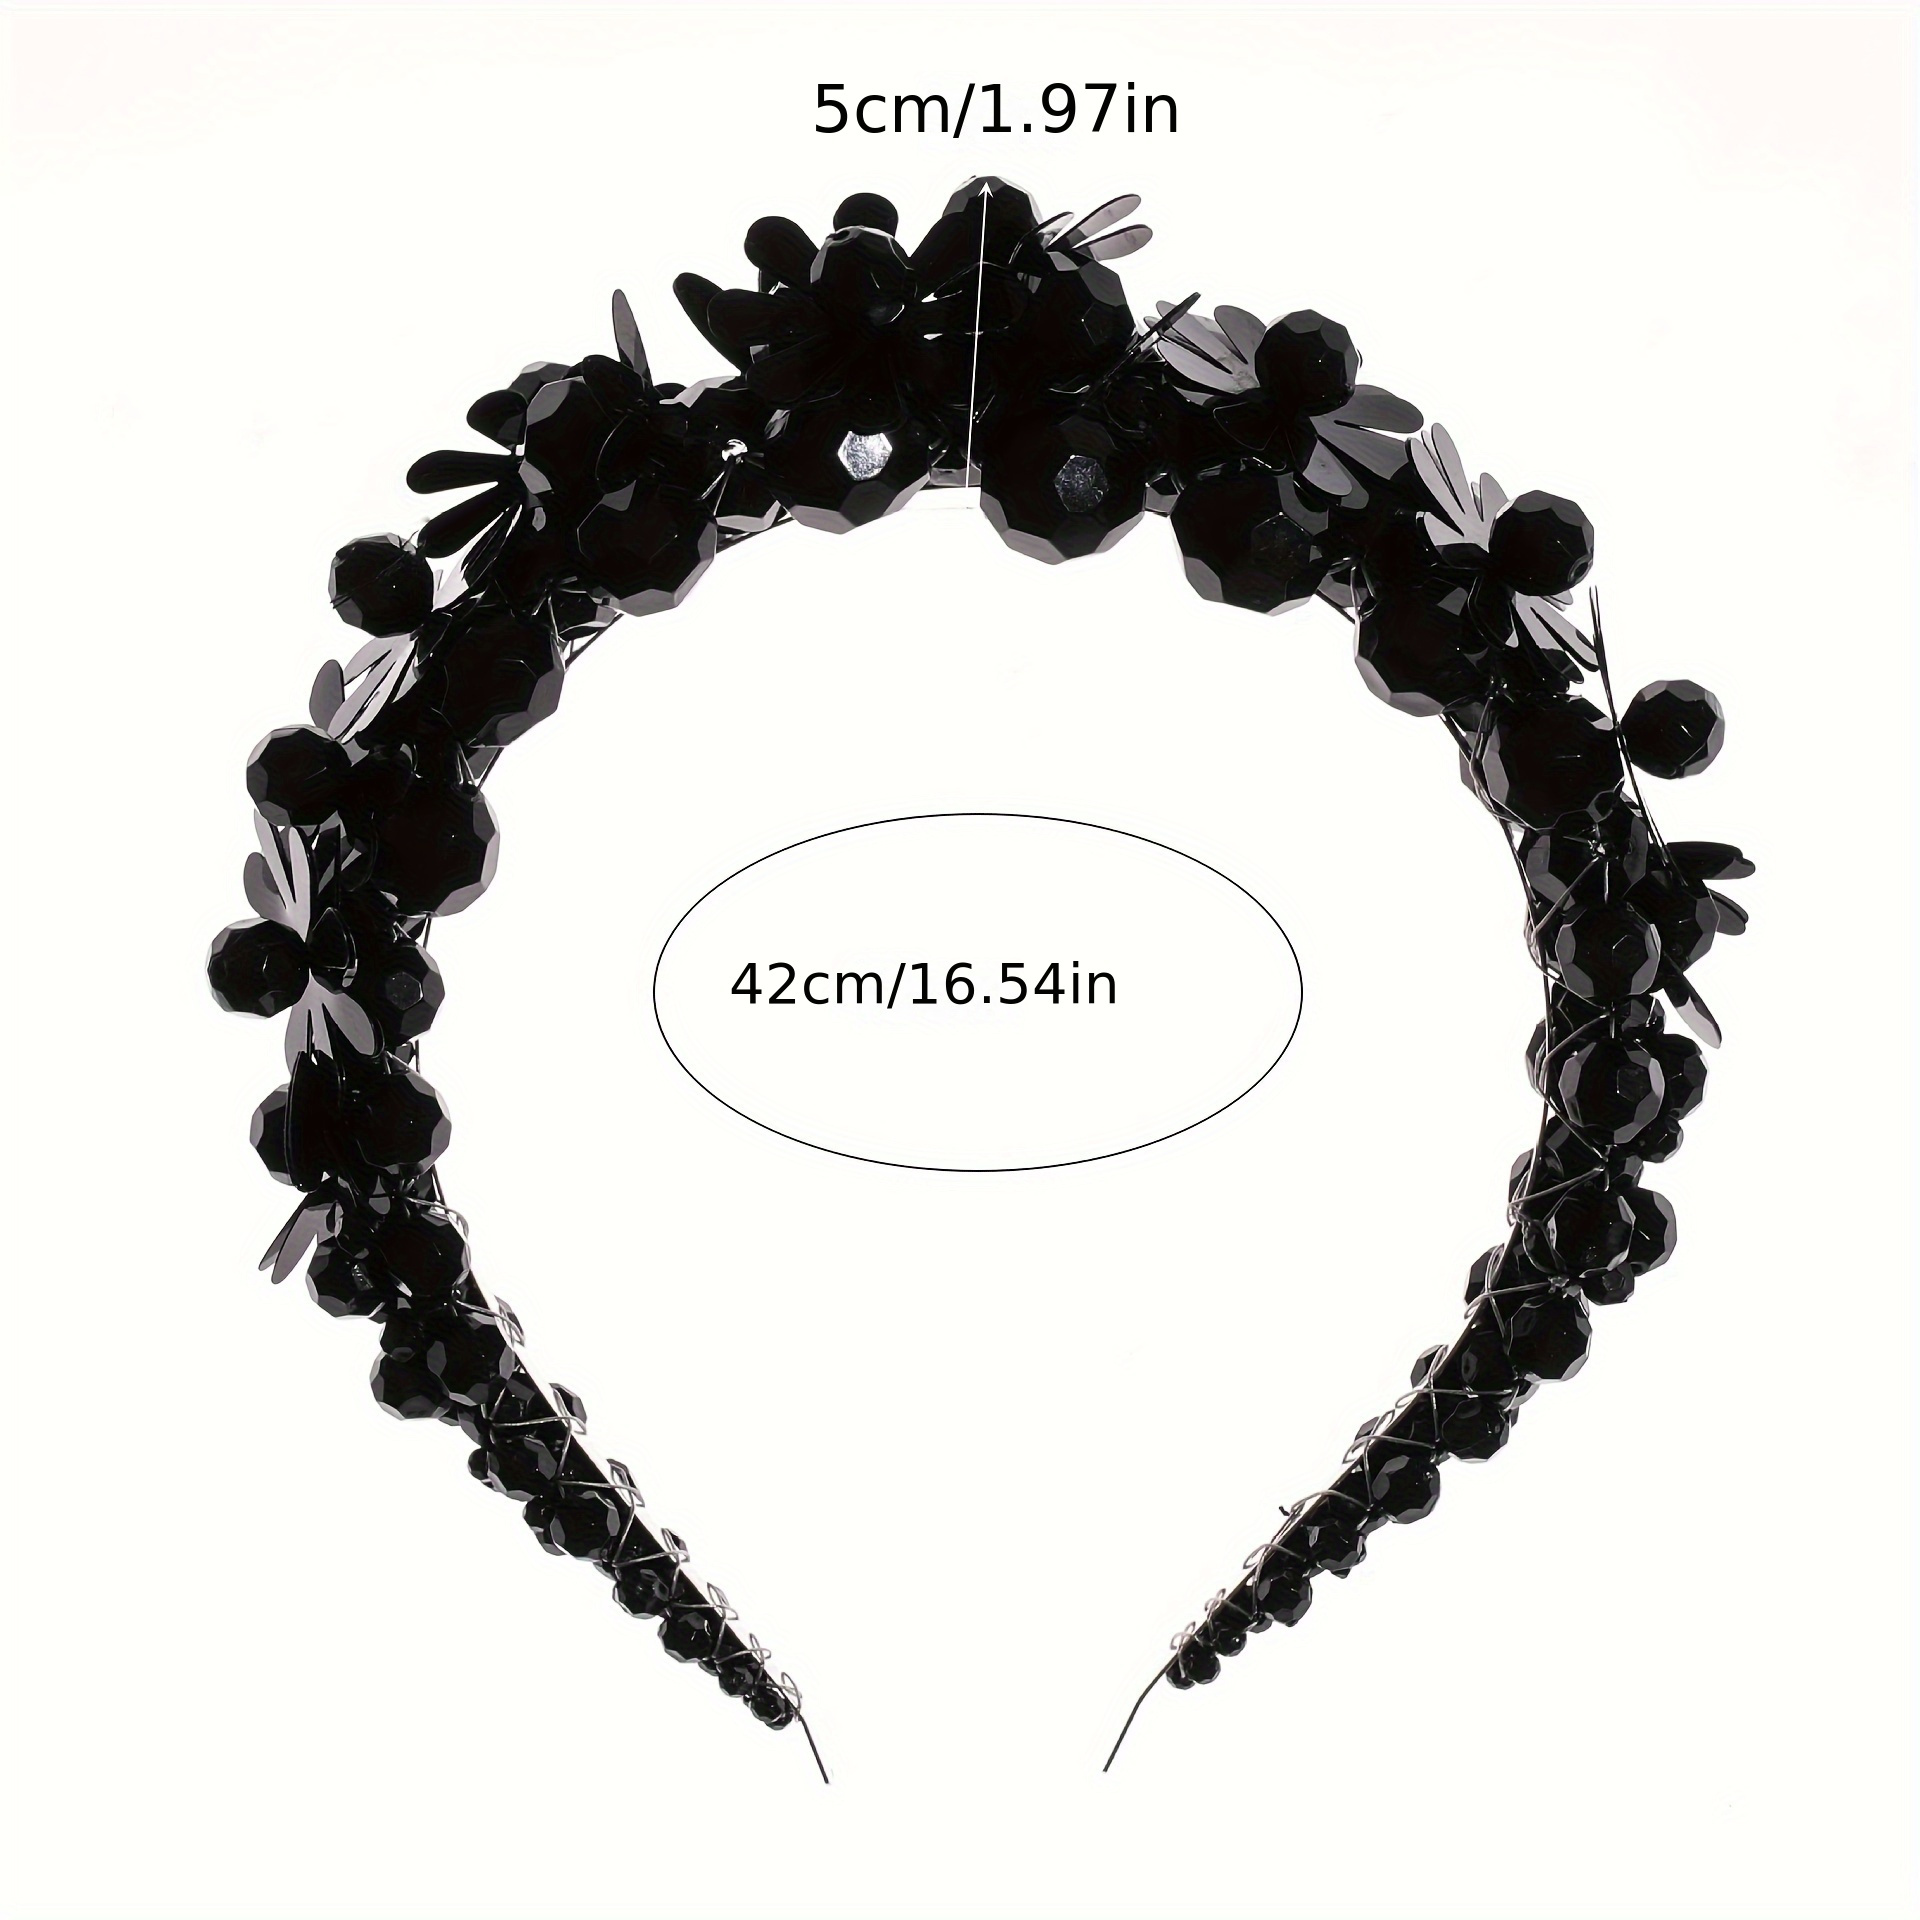 1pc high end rhinestone headband exquisite shiny beads hair hoop bridal wedding dress hair accessories